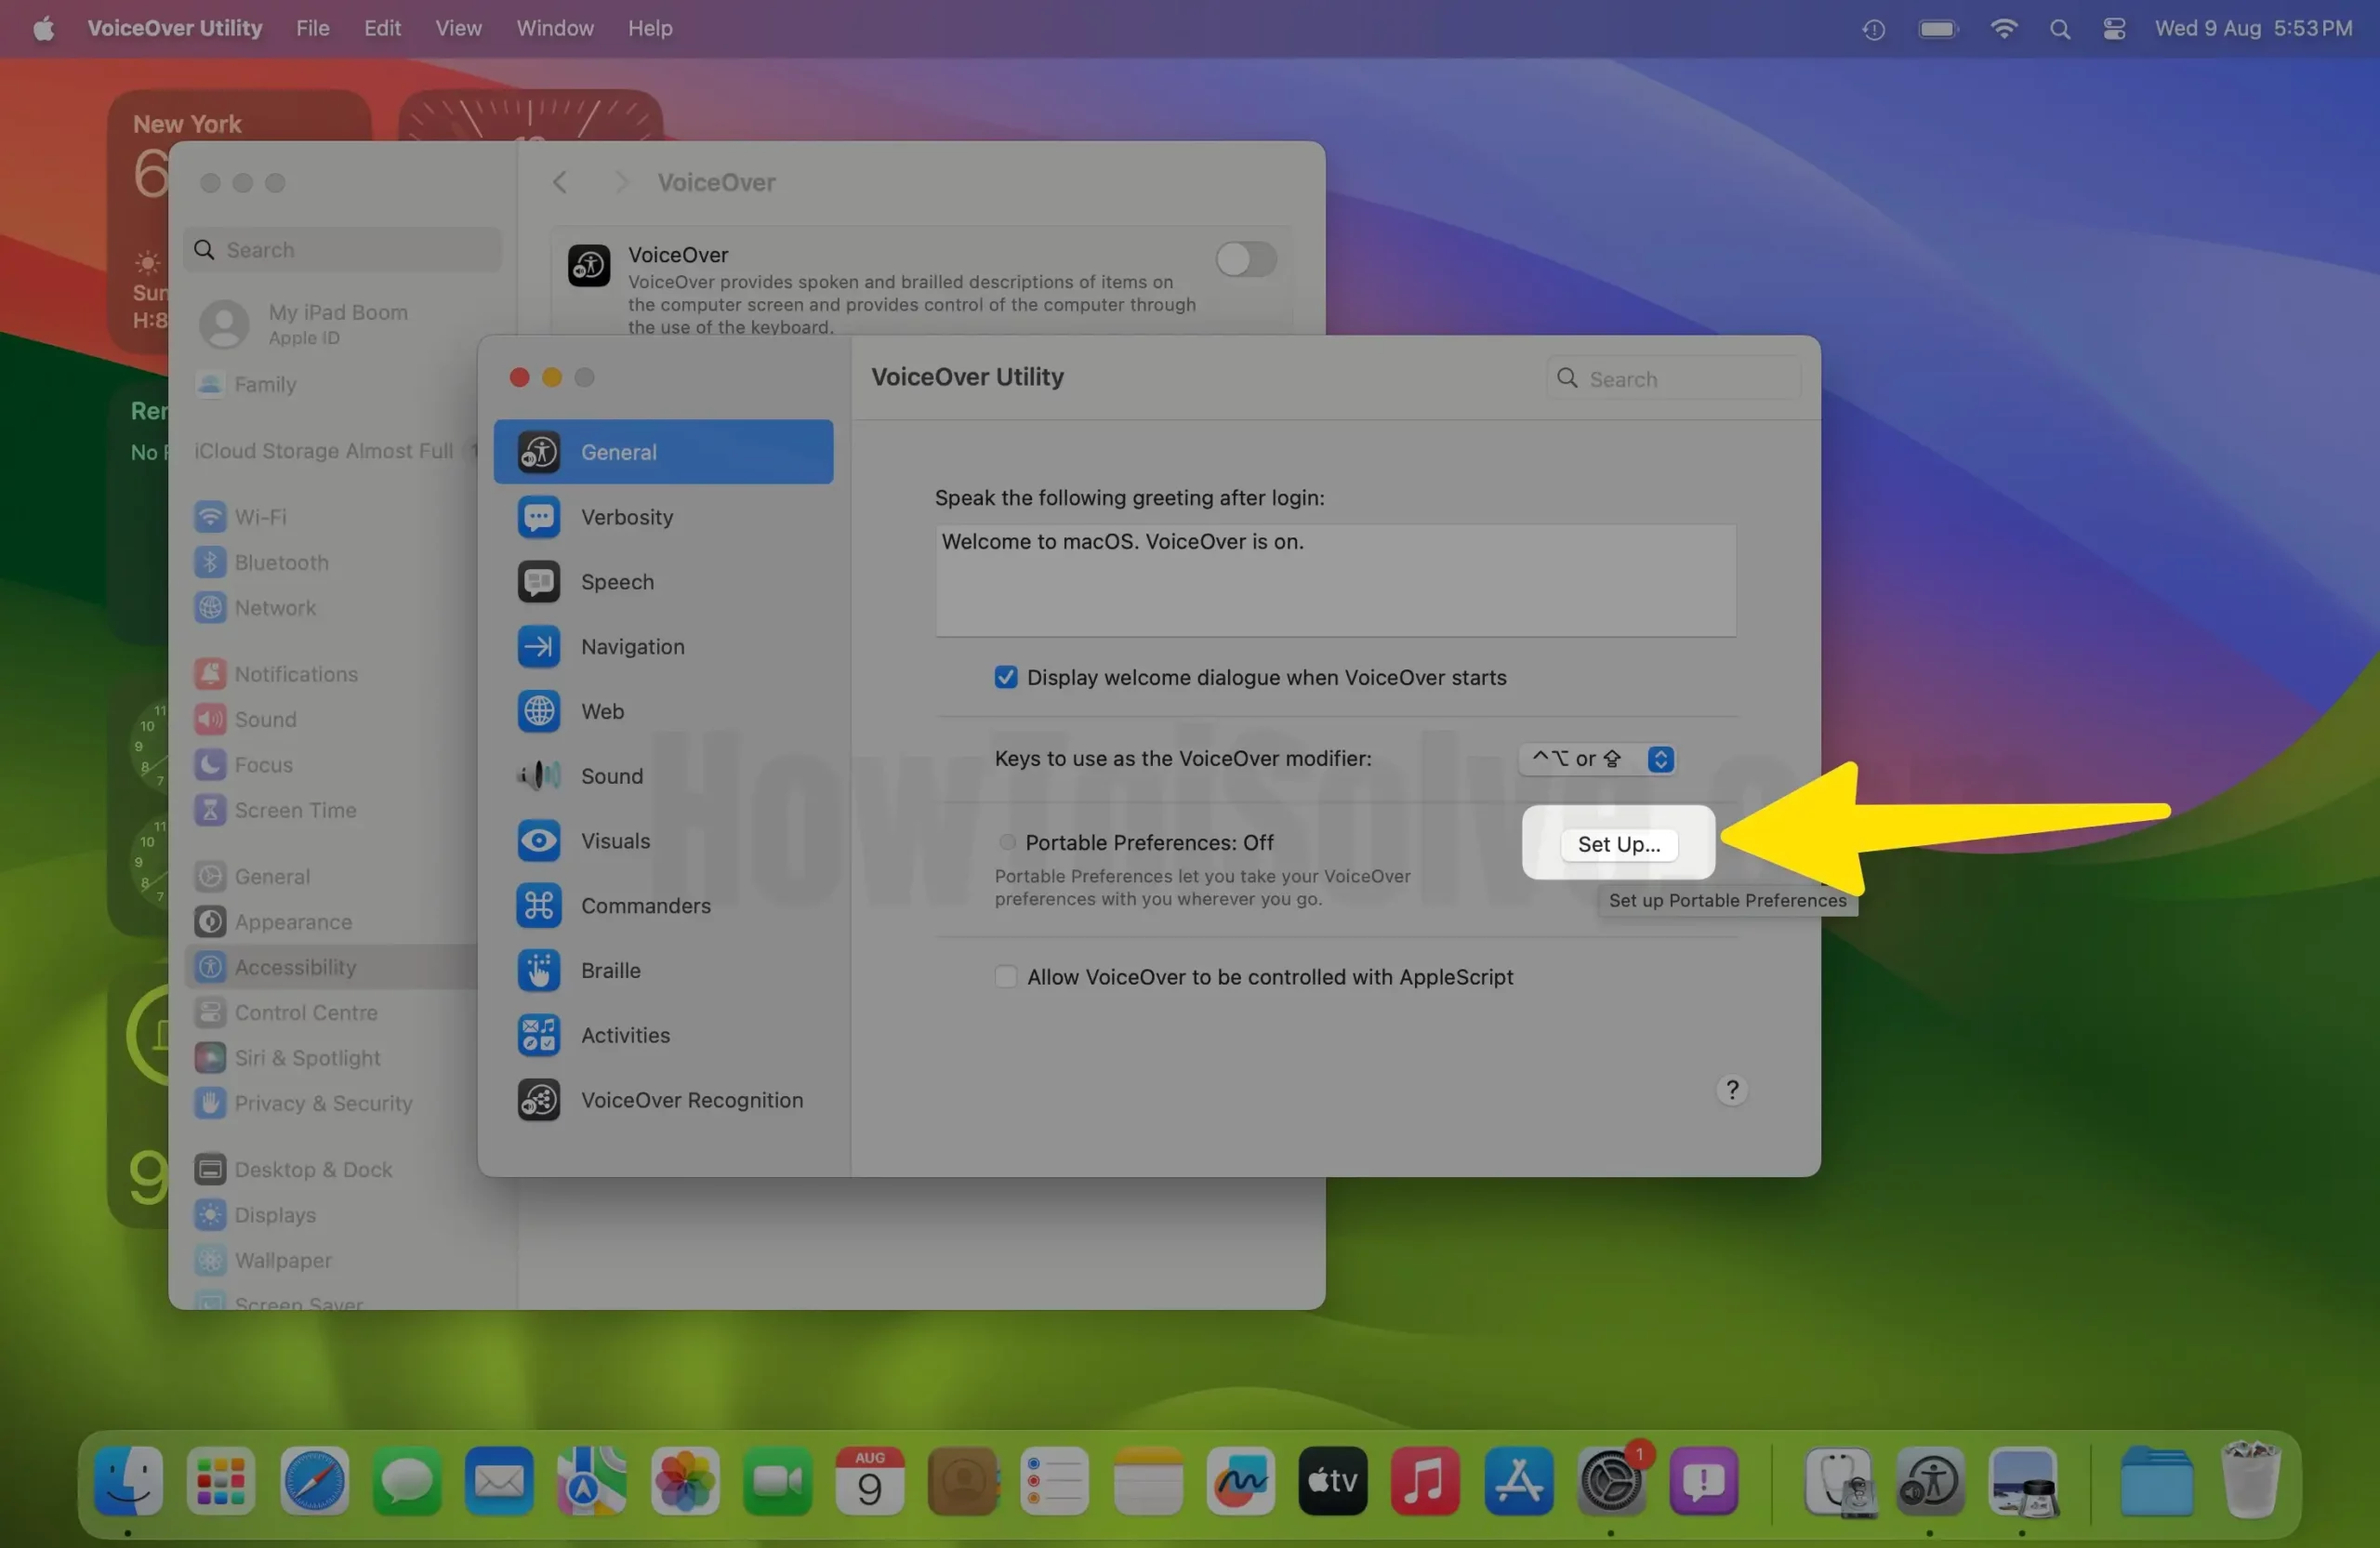 Setup VoiceOver Portable Preferences on Mac